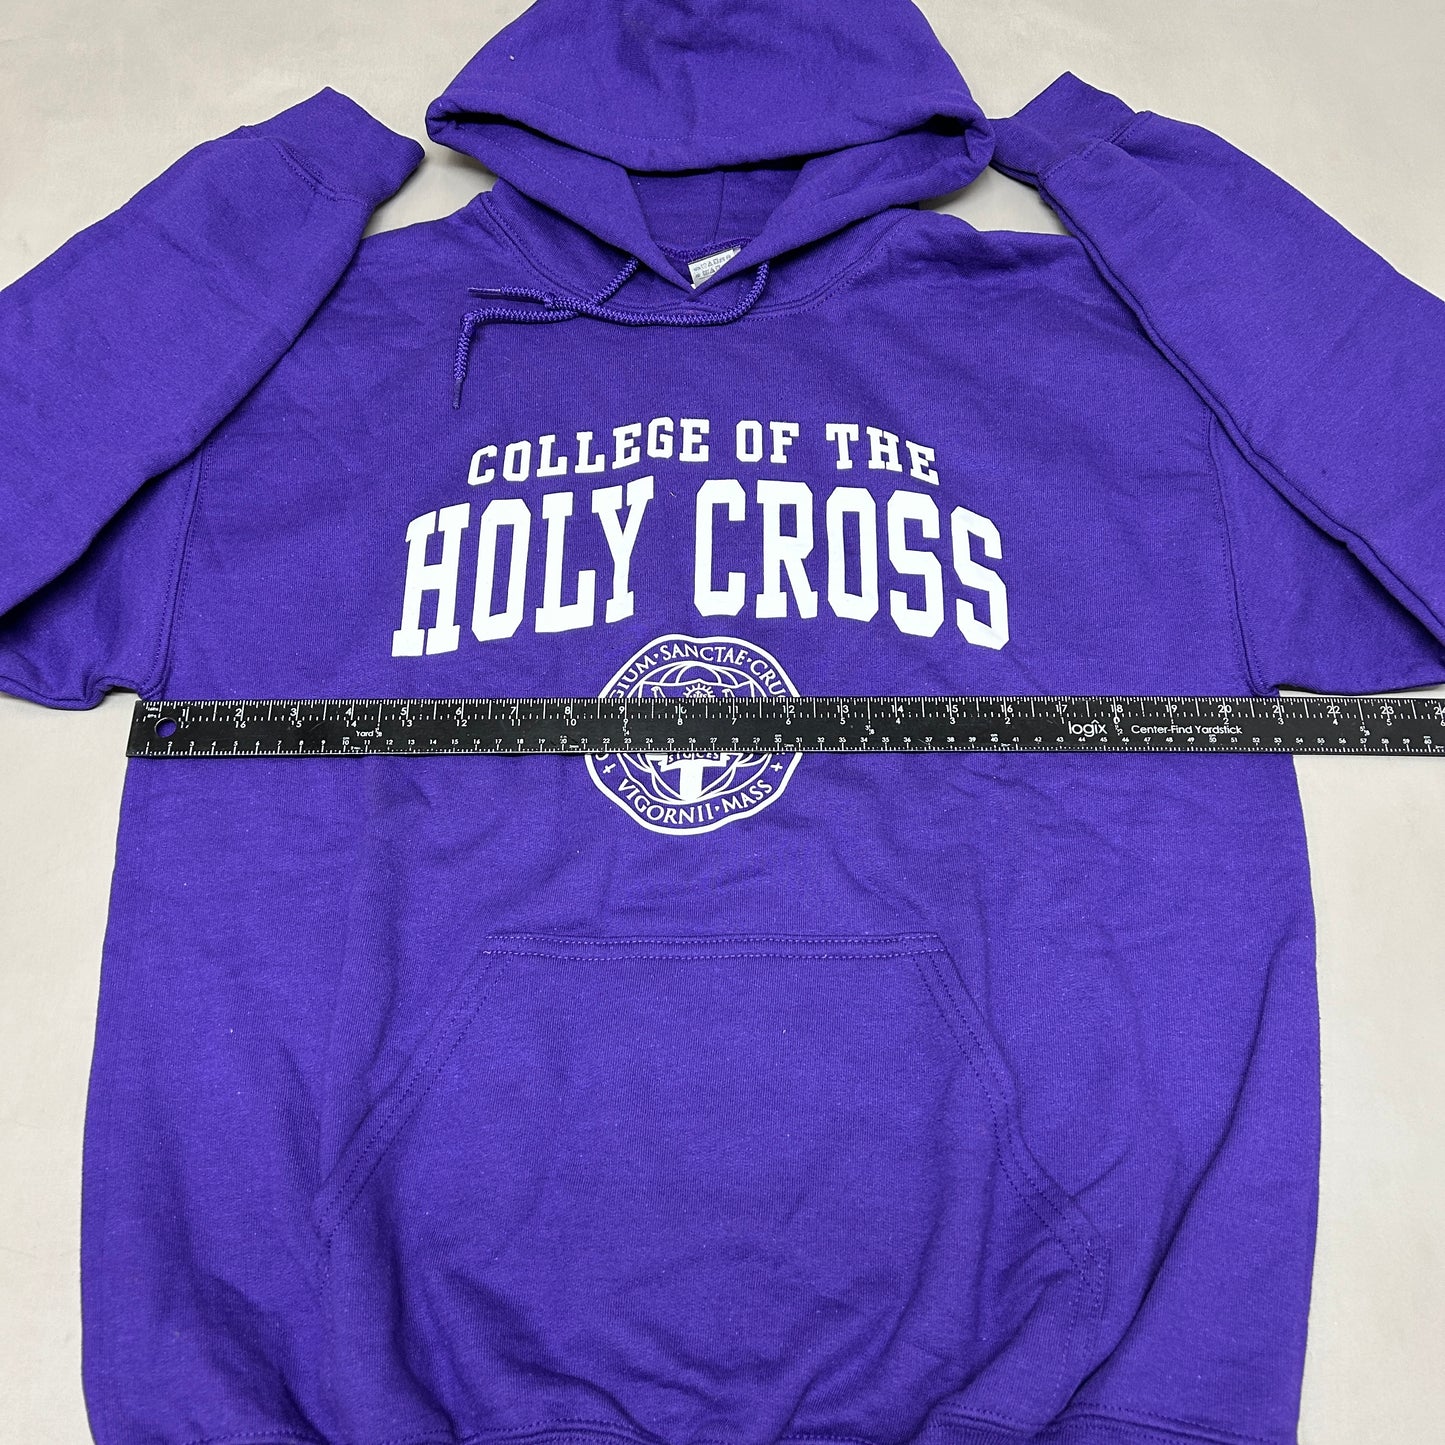 GILDAN College of the Holy Cross Heritage Hooded Sweatshirt Hoodie Unisex Sz M Purple (New)